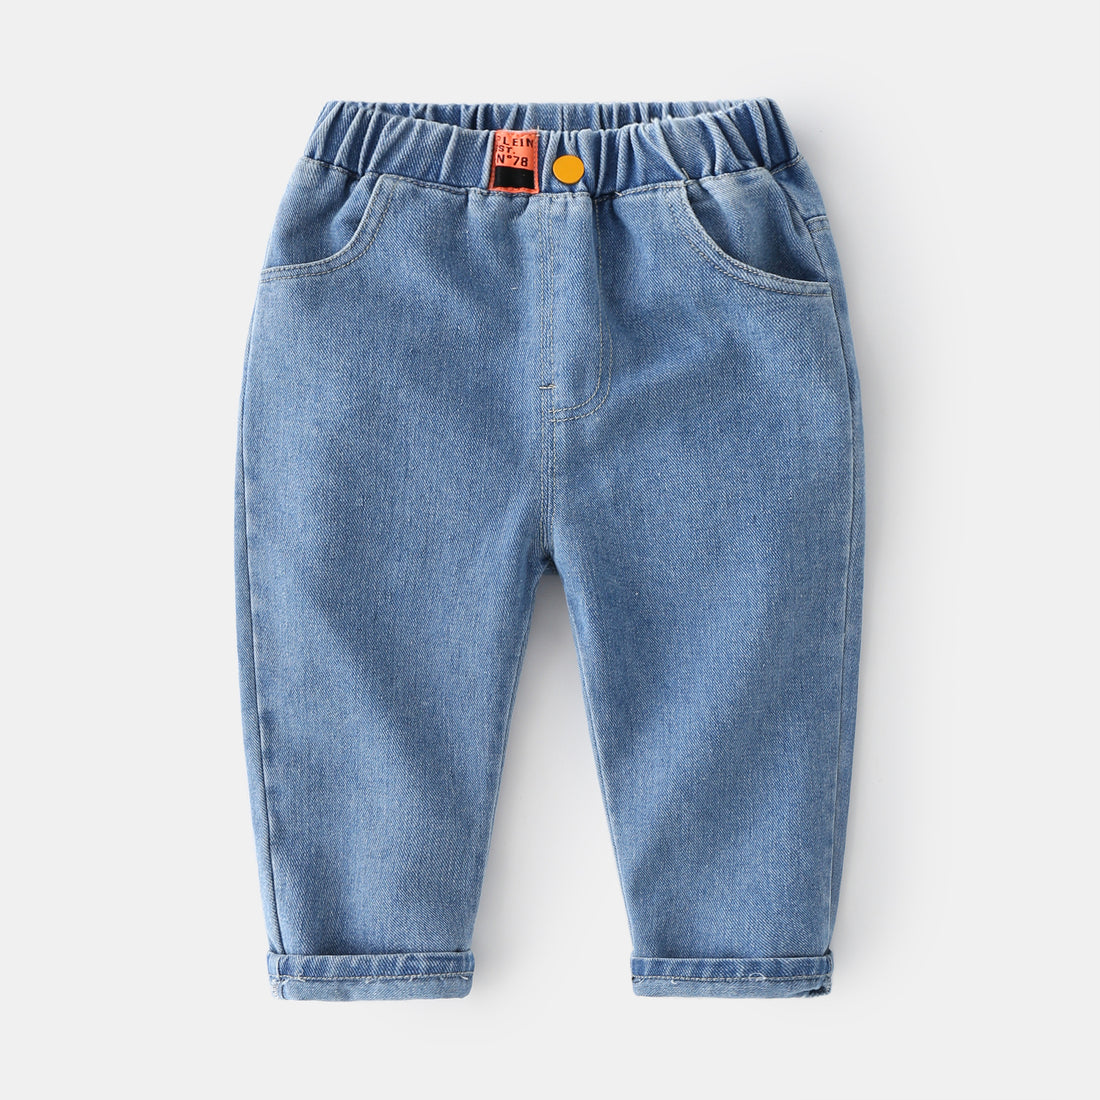 [513280] - Bawahan Keren / Celana Jeans Anak Import - Motif Denim Plain